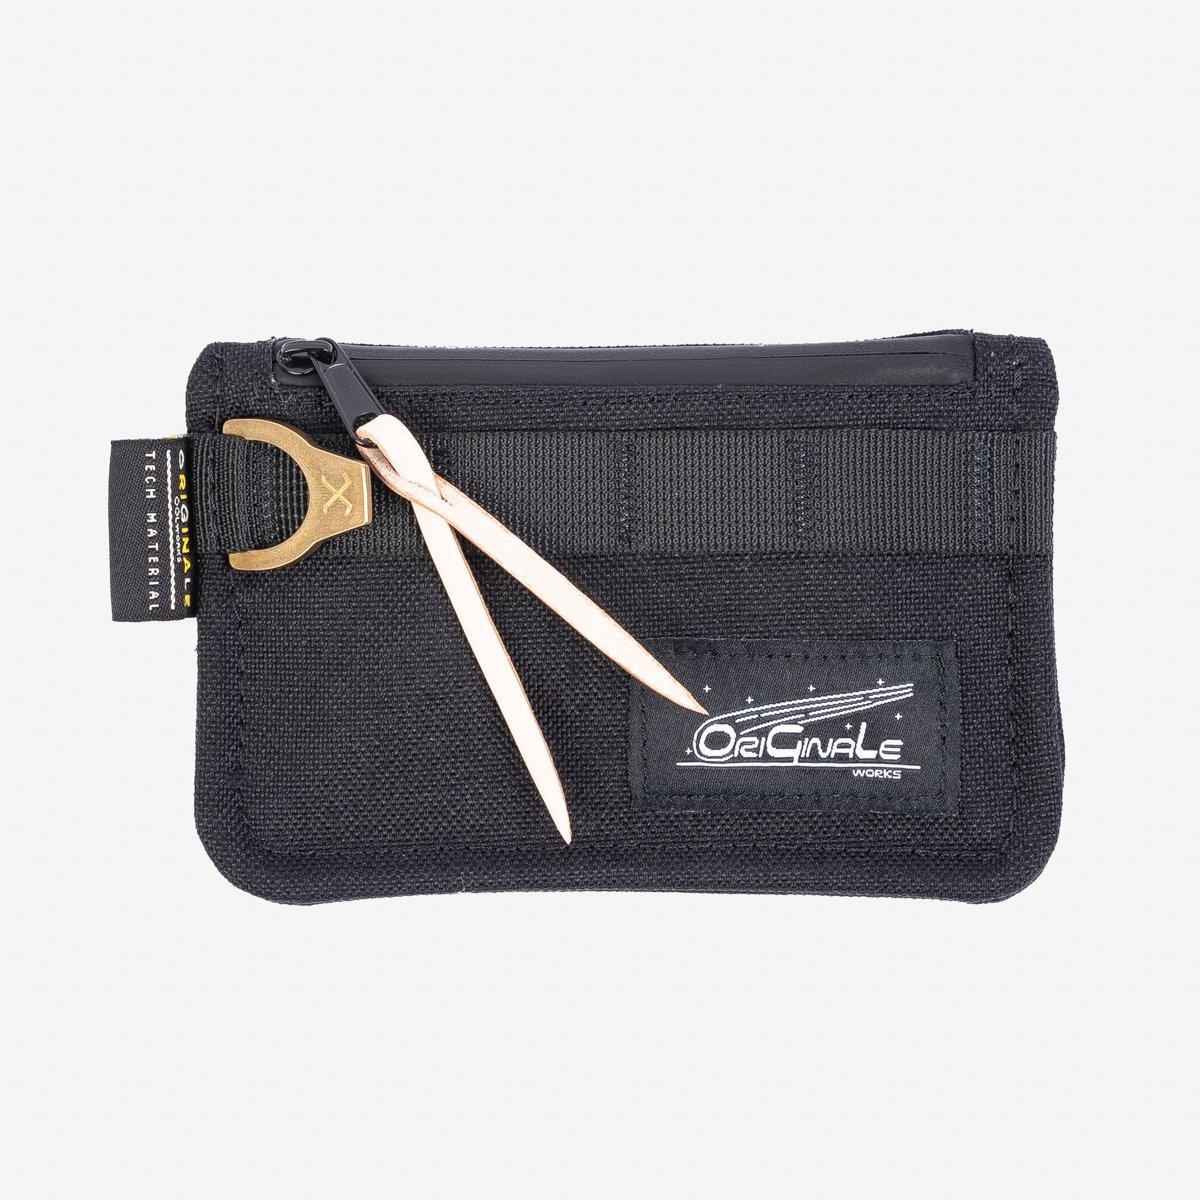 OGL-ORI-SH OGL Originale Tech Material Outdoor Short Wallet - Black - 1